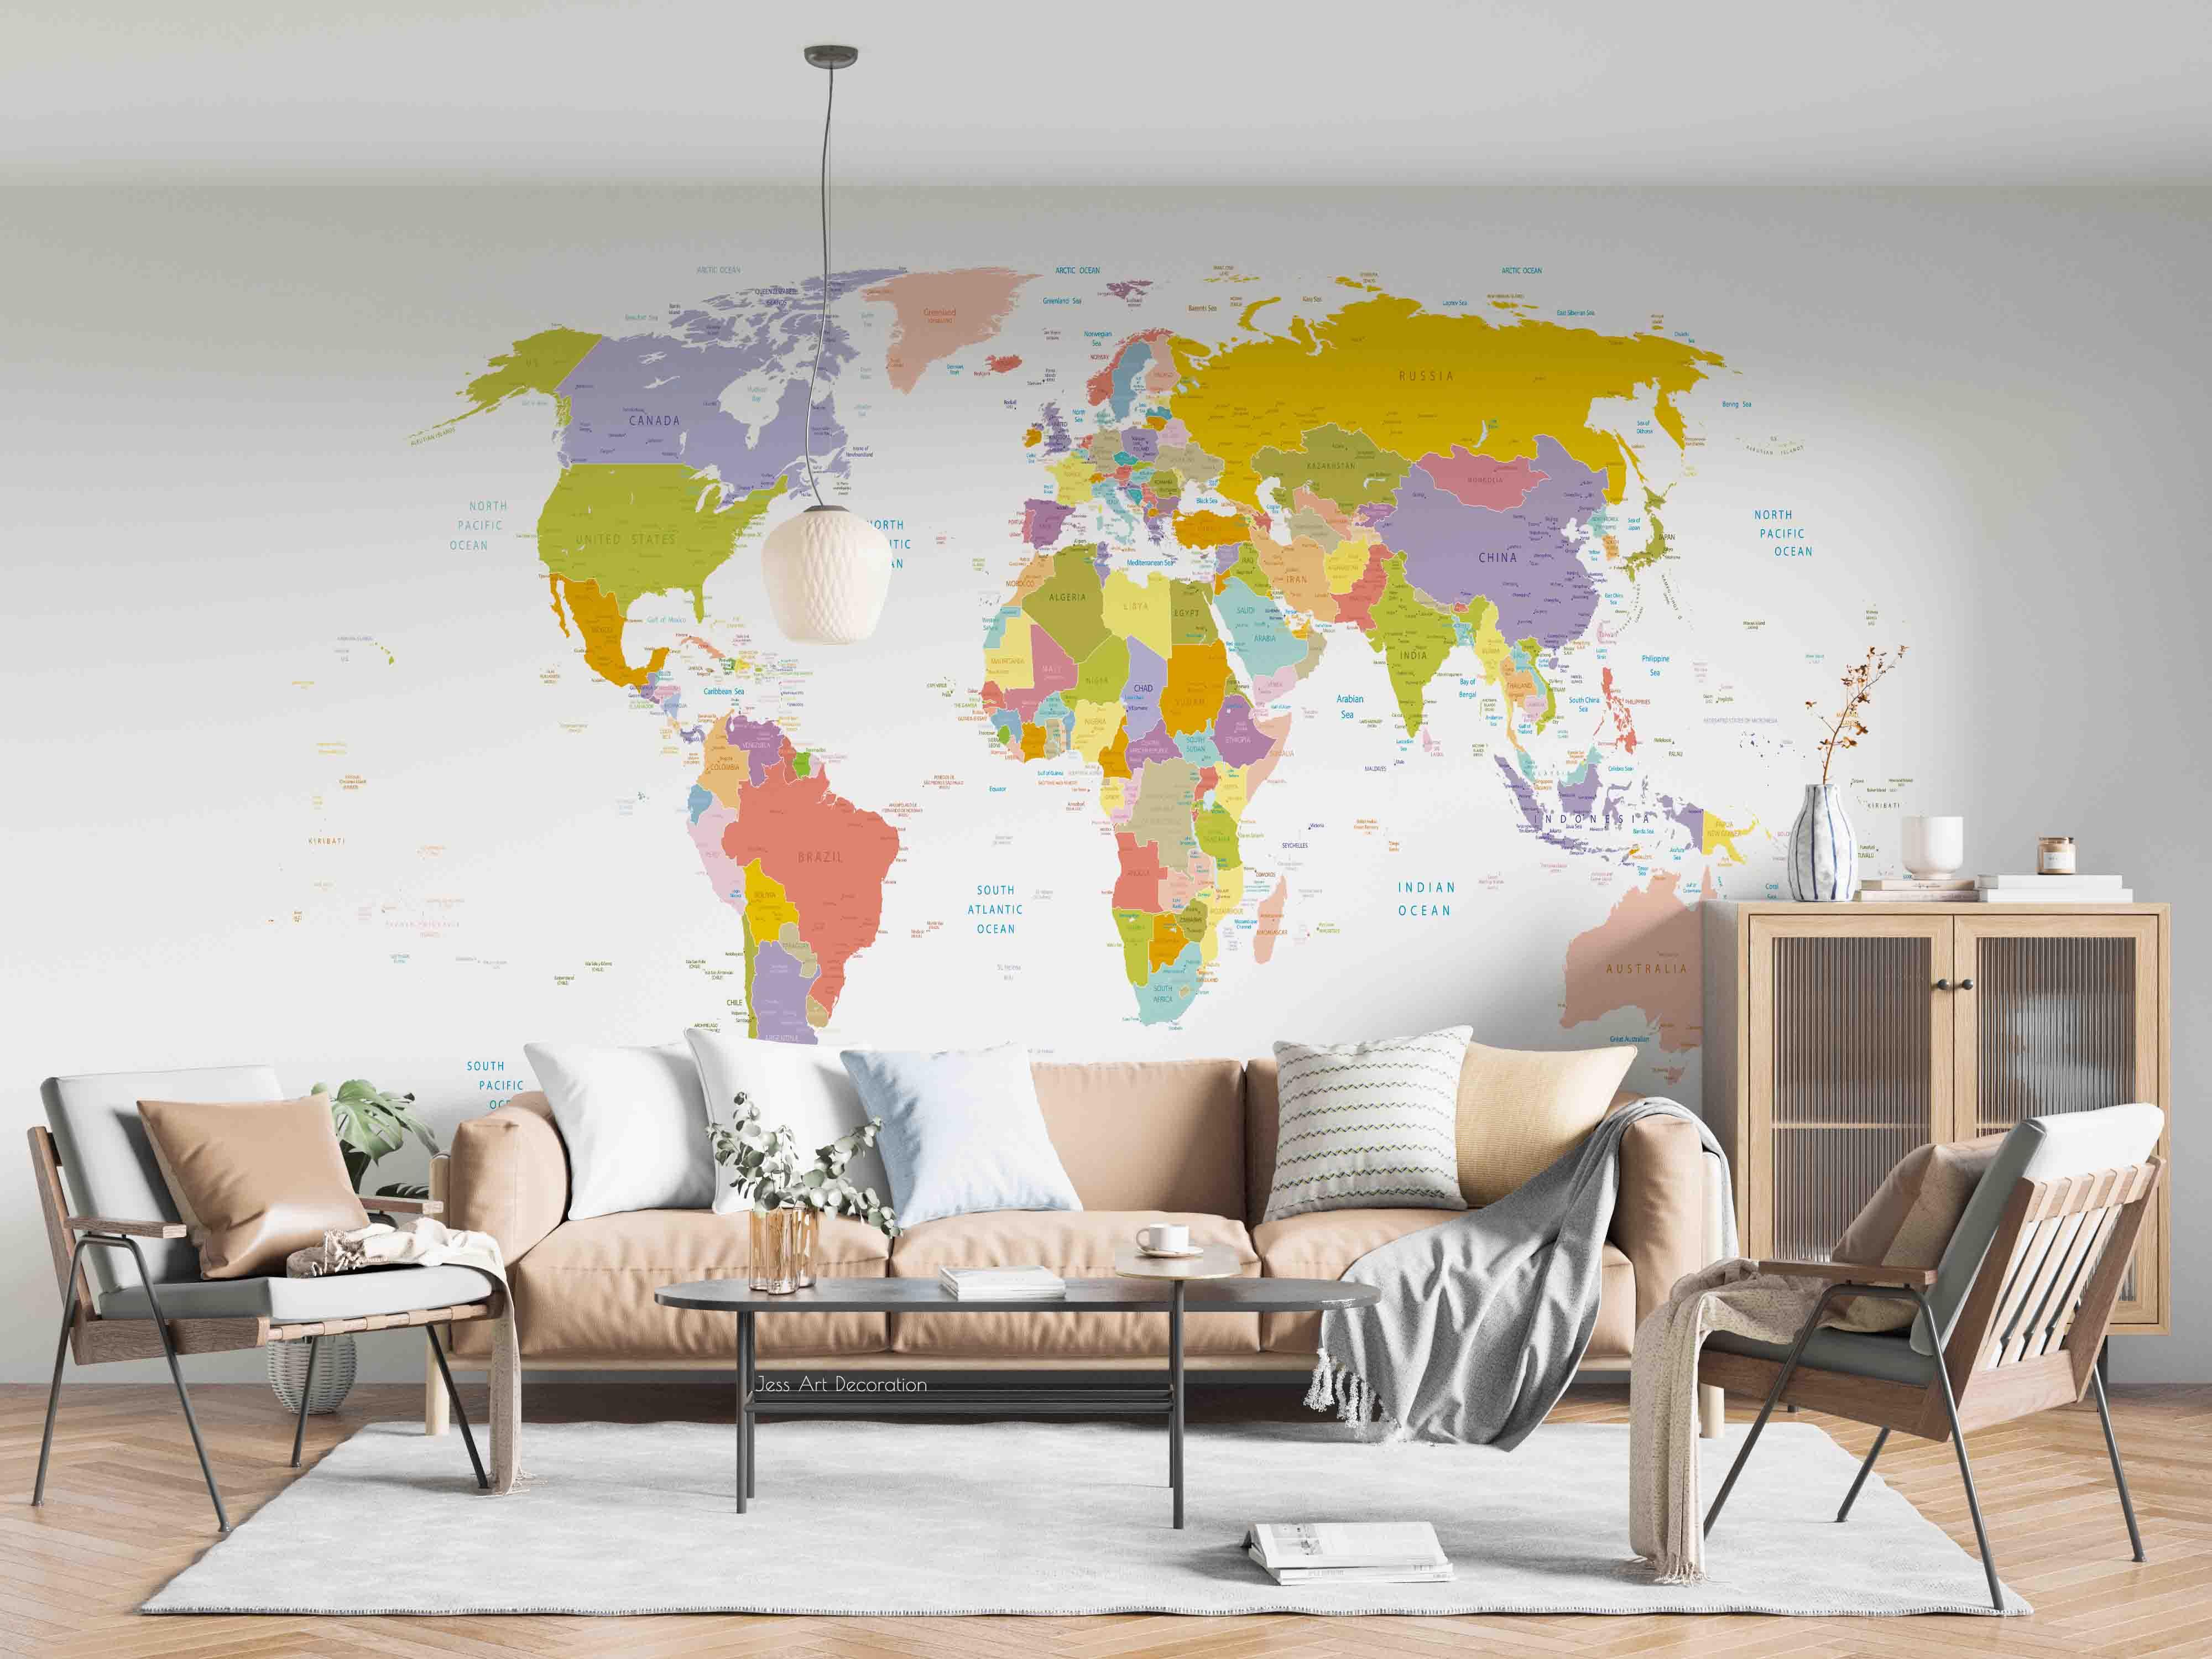 3D World Map Colorful Land Plates Wall Mural Wallpaper GD 2581- Jess Art Decoration